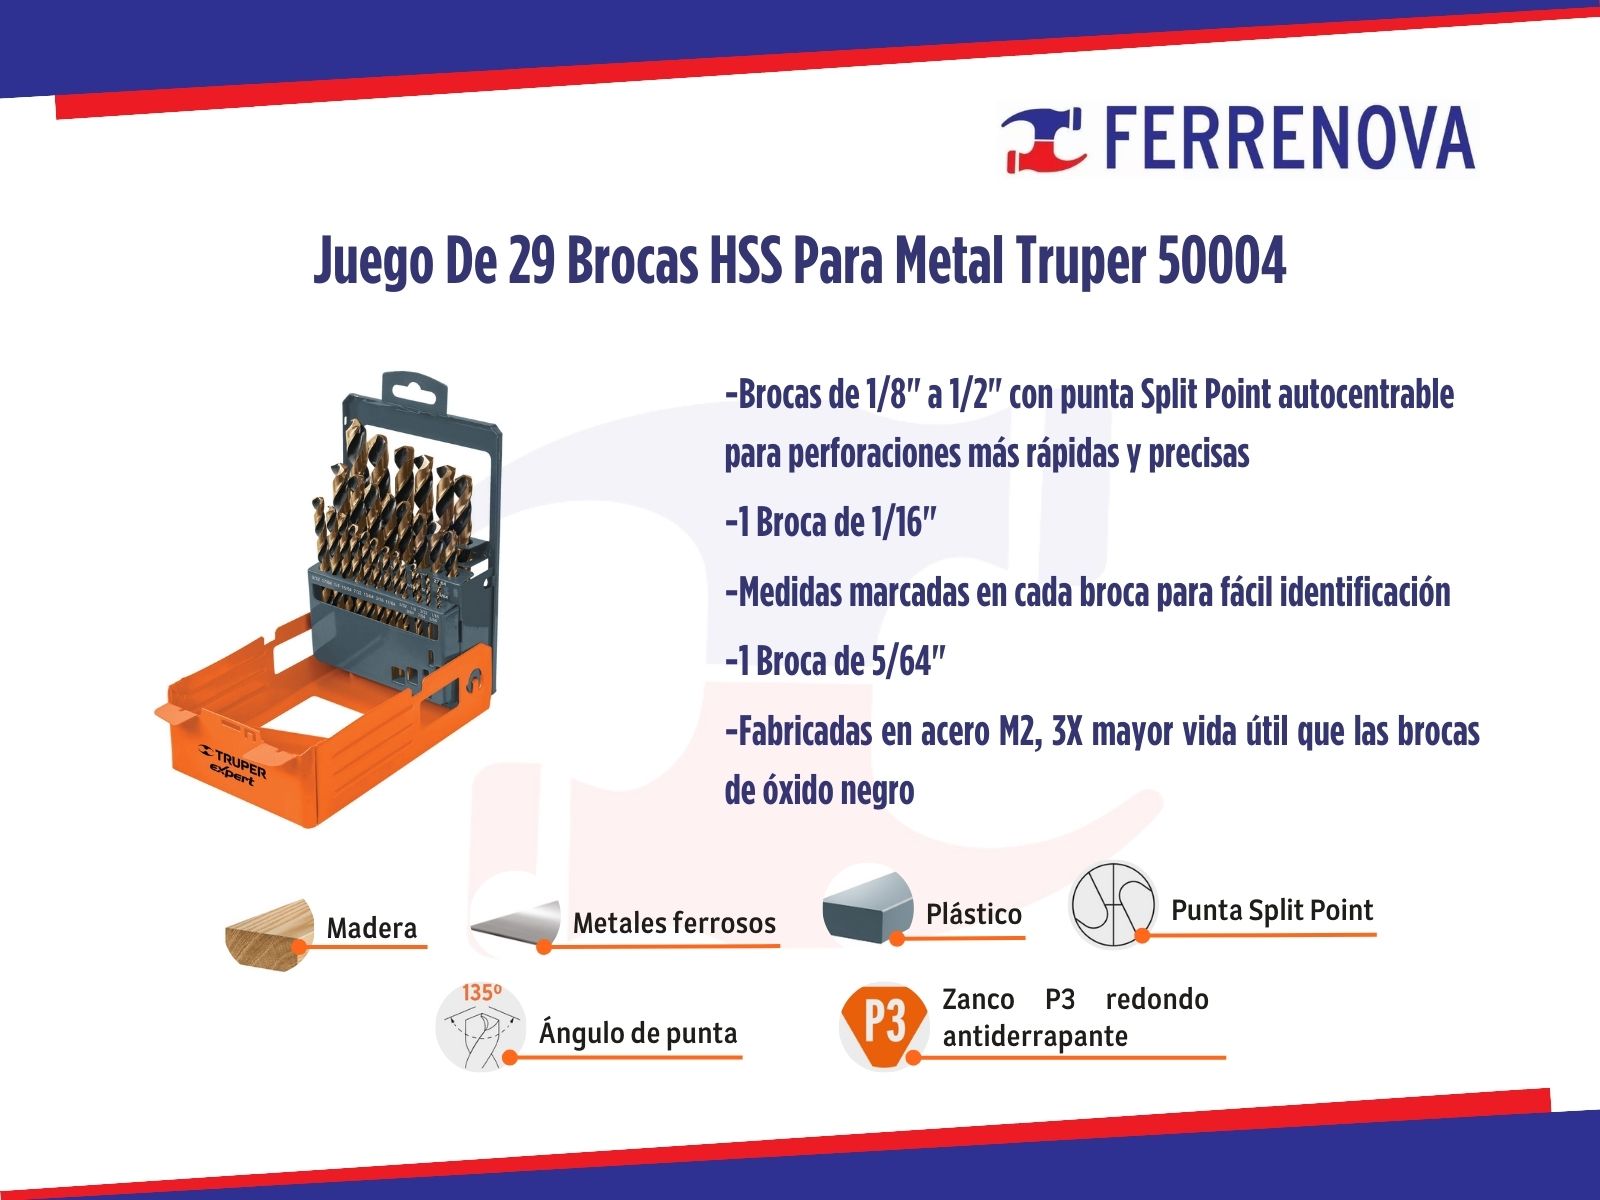 Juego De 29 Brocas HSS Para Metal Truper 50004